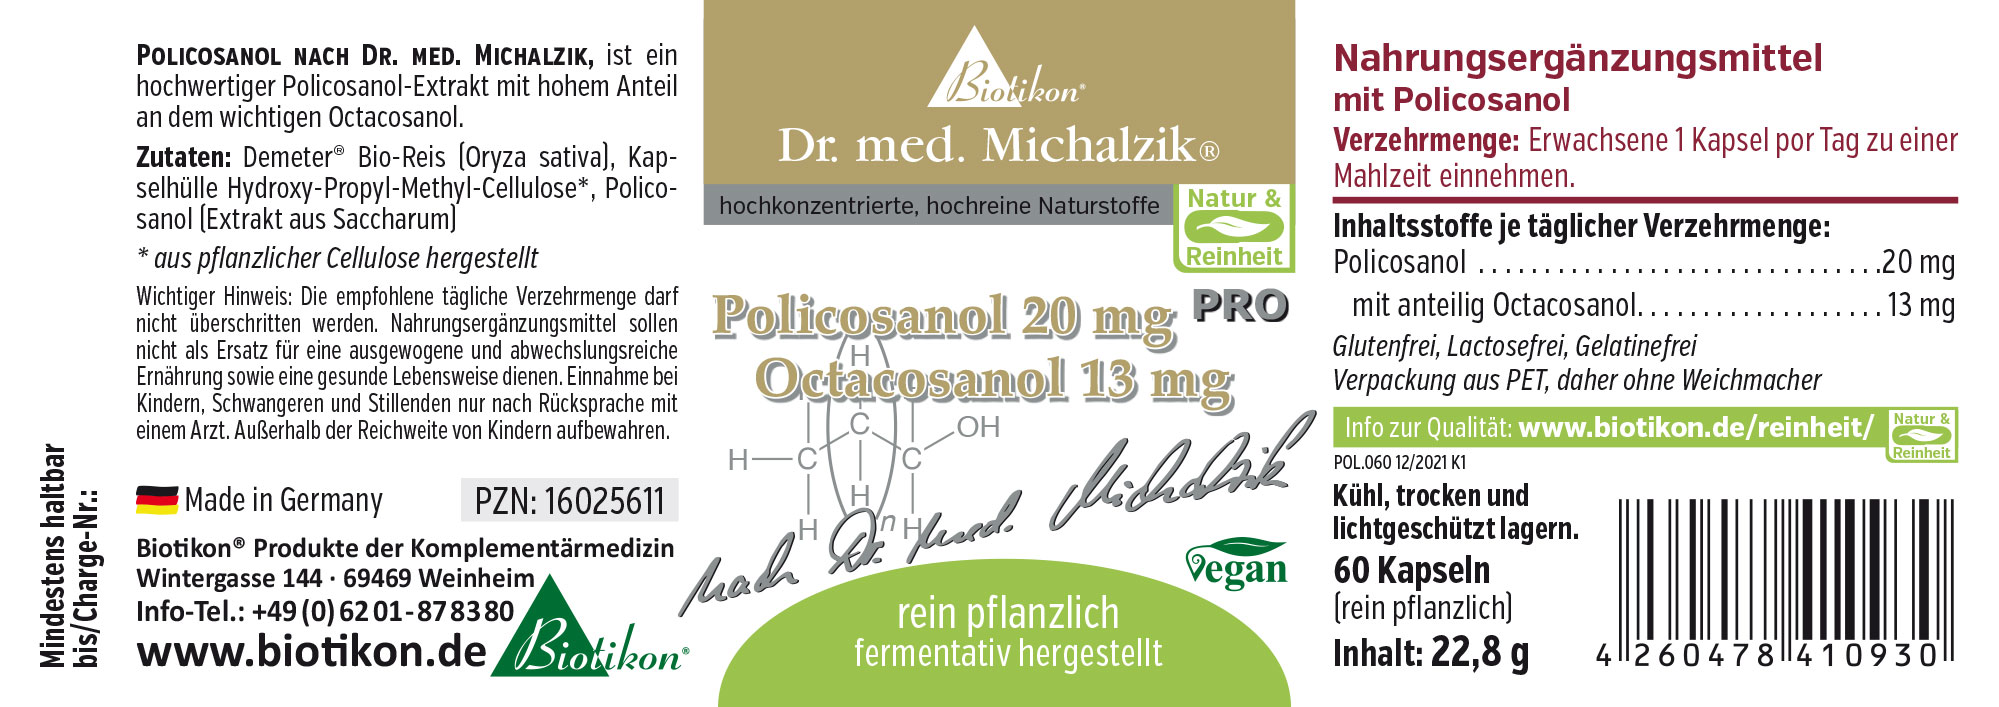 Policosanolo PRO di Dr. med. Michalzik